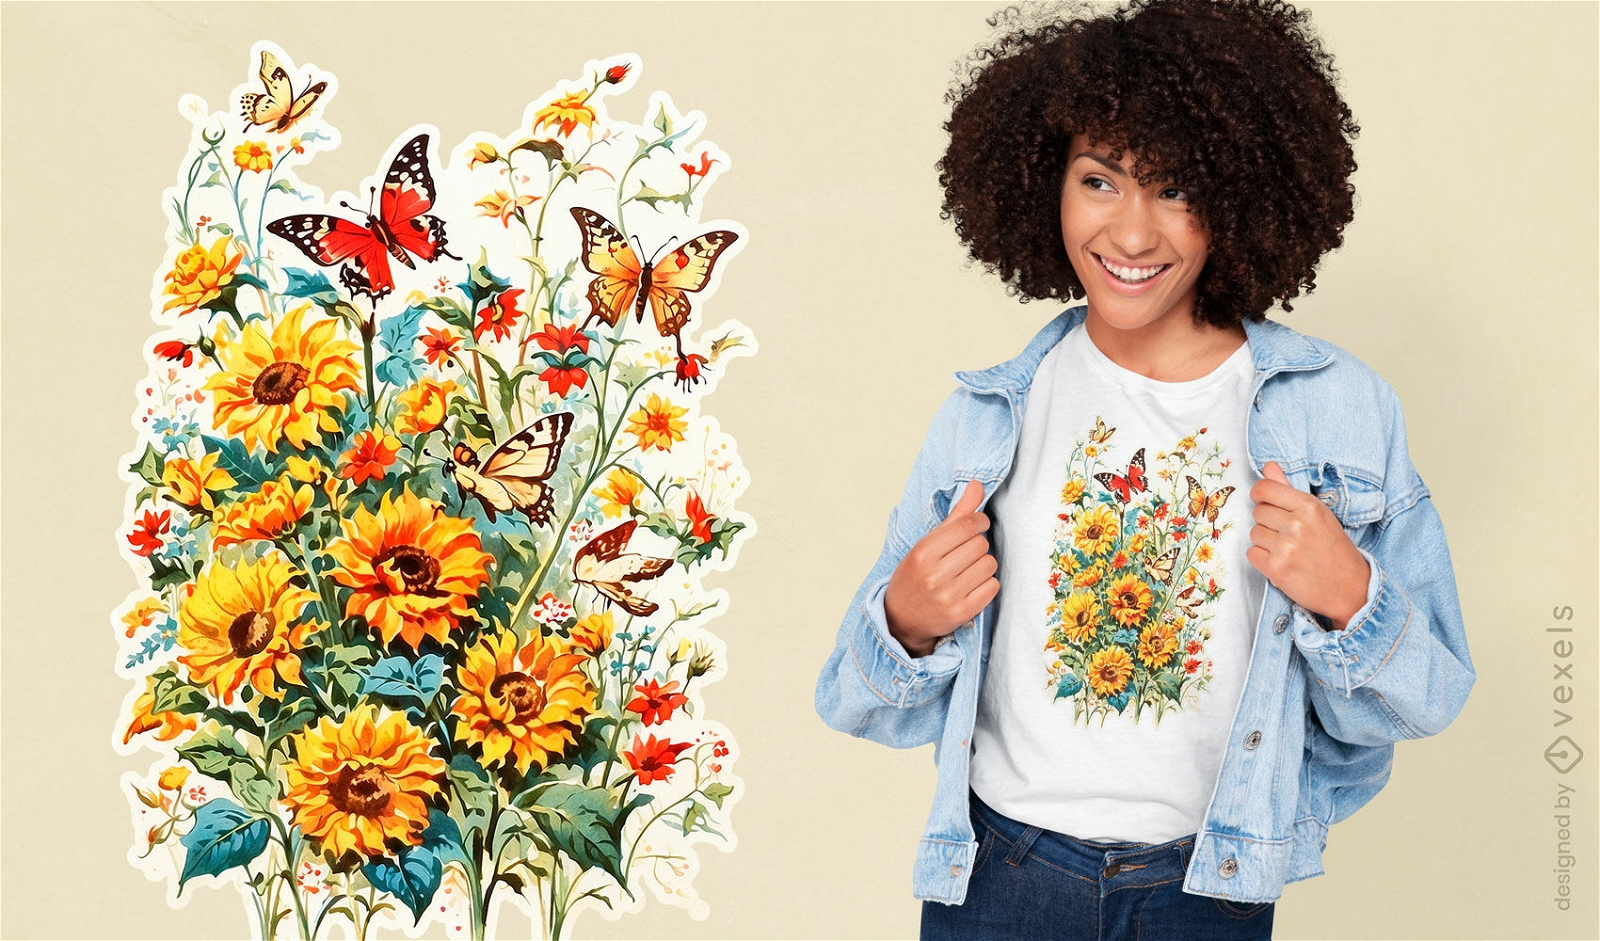 Butterfly around flowers t-shirt design